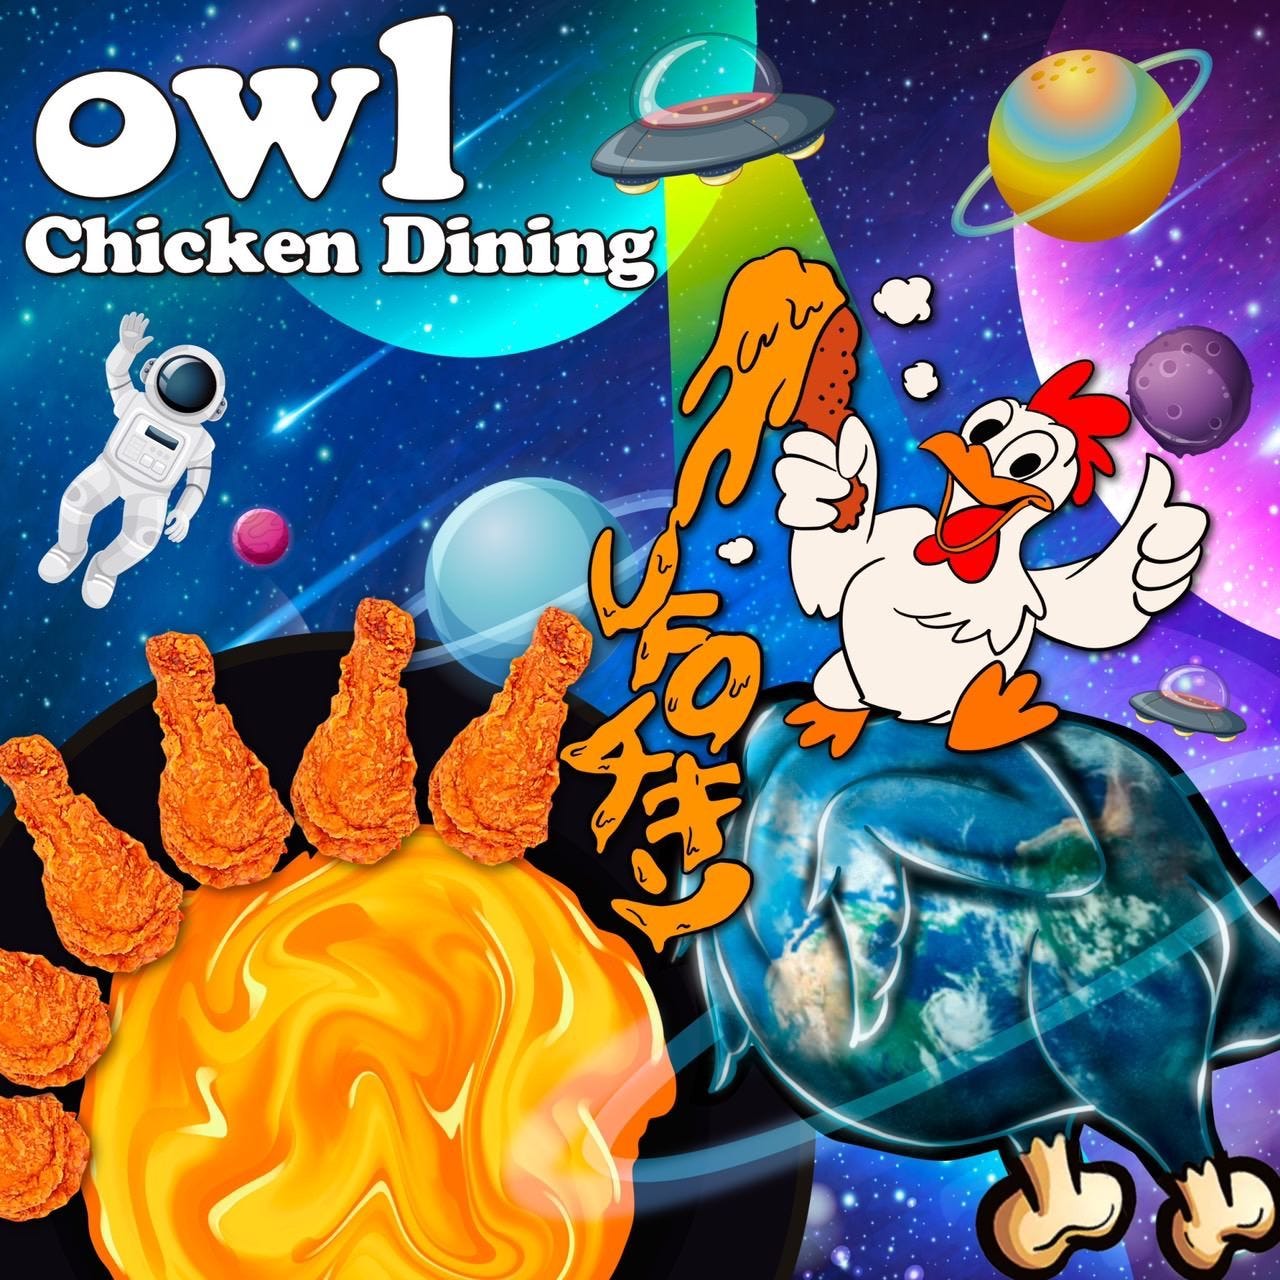 Chicken Dining owl-アウル-のURL1